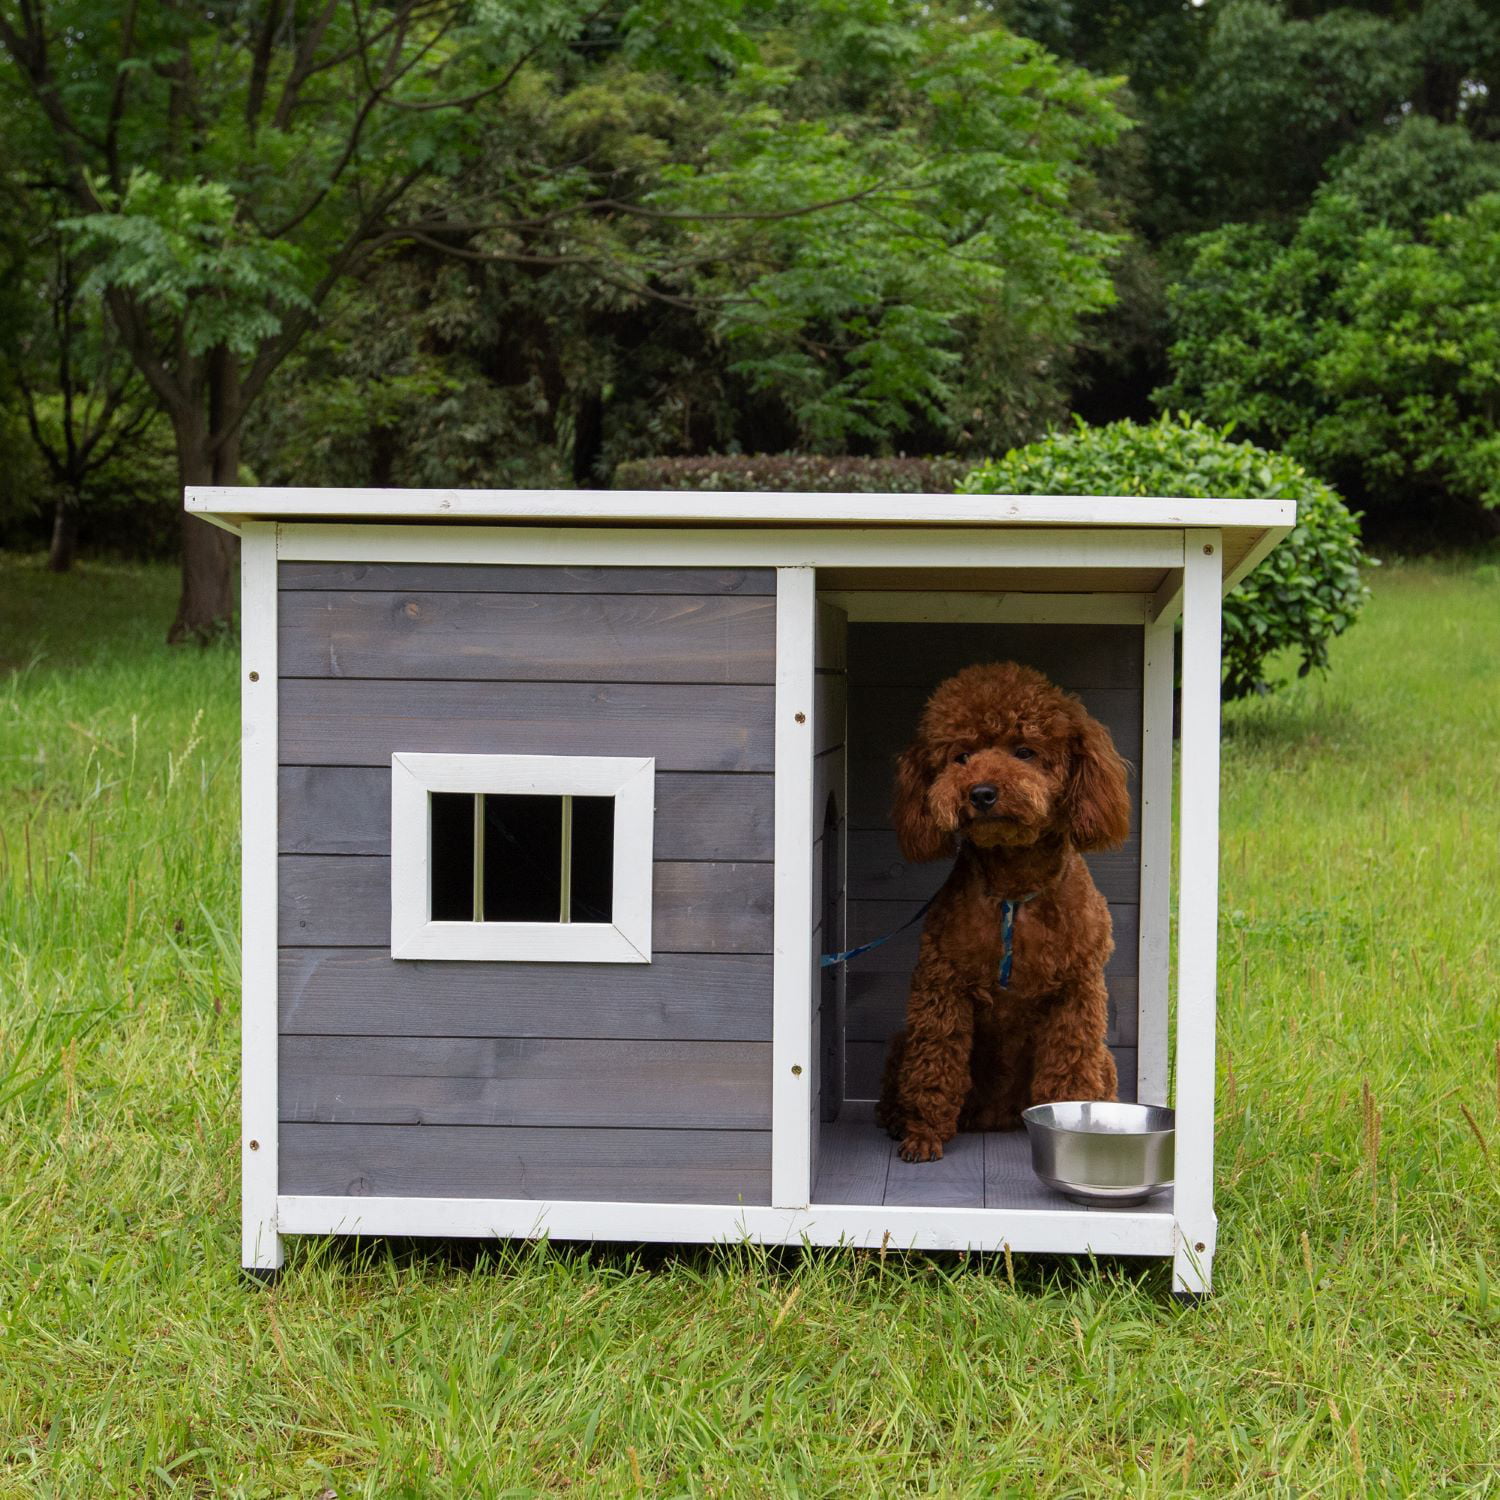 Confidence Pet XXL Waterproof Plastic Dog Kennel Outdoor House Green